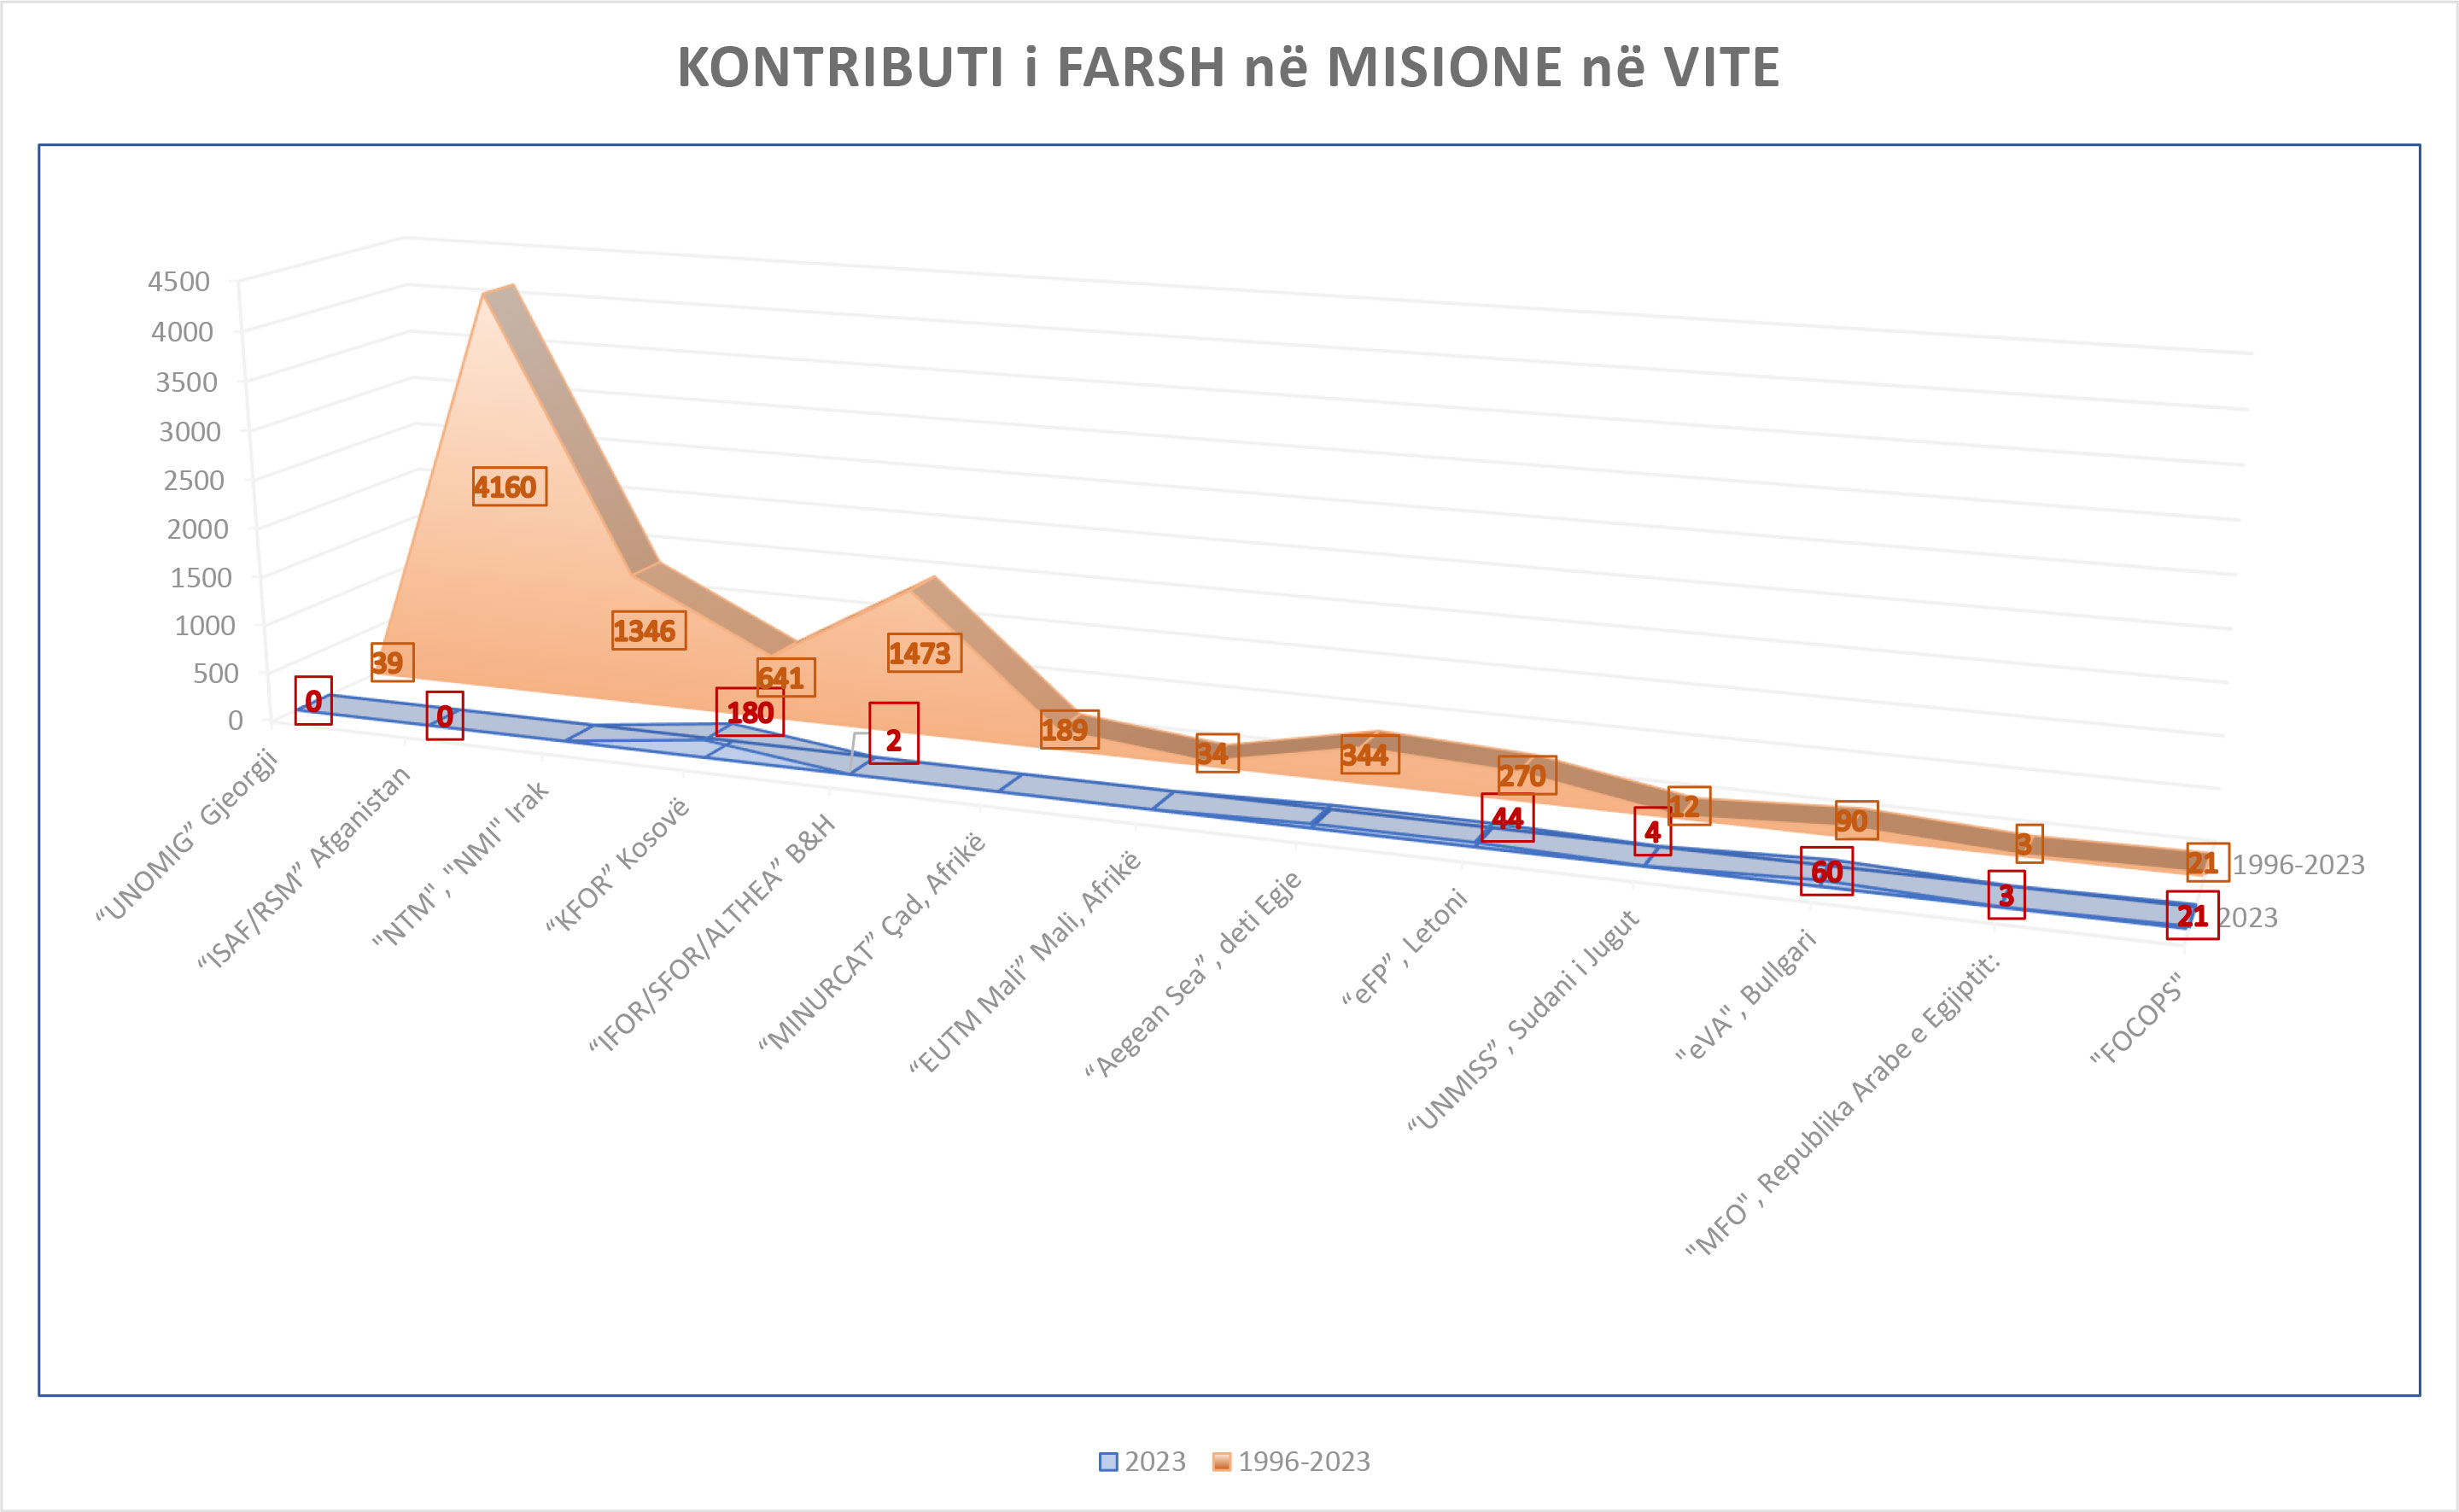 misionet FARSH 2023 vite